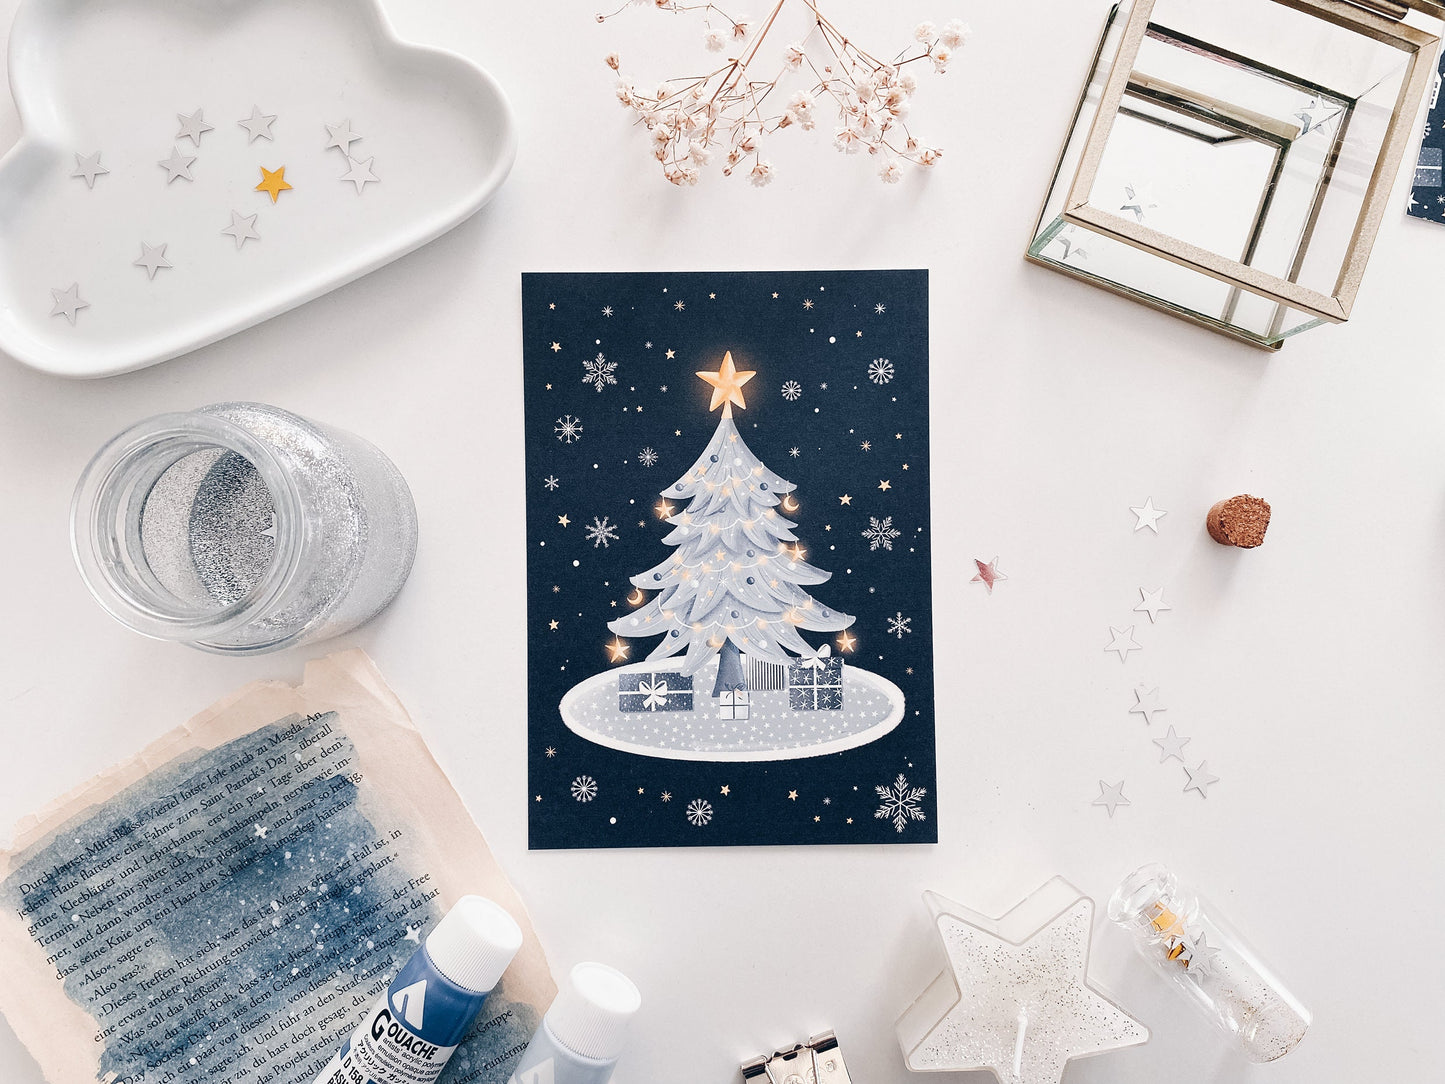 Greeting Card - Christmas Tree